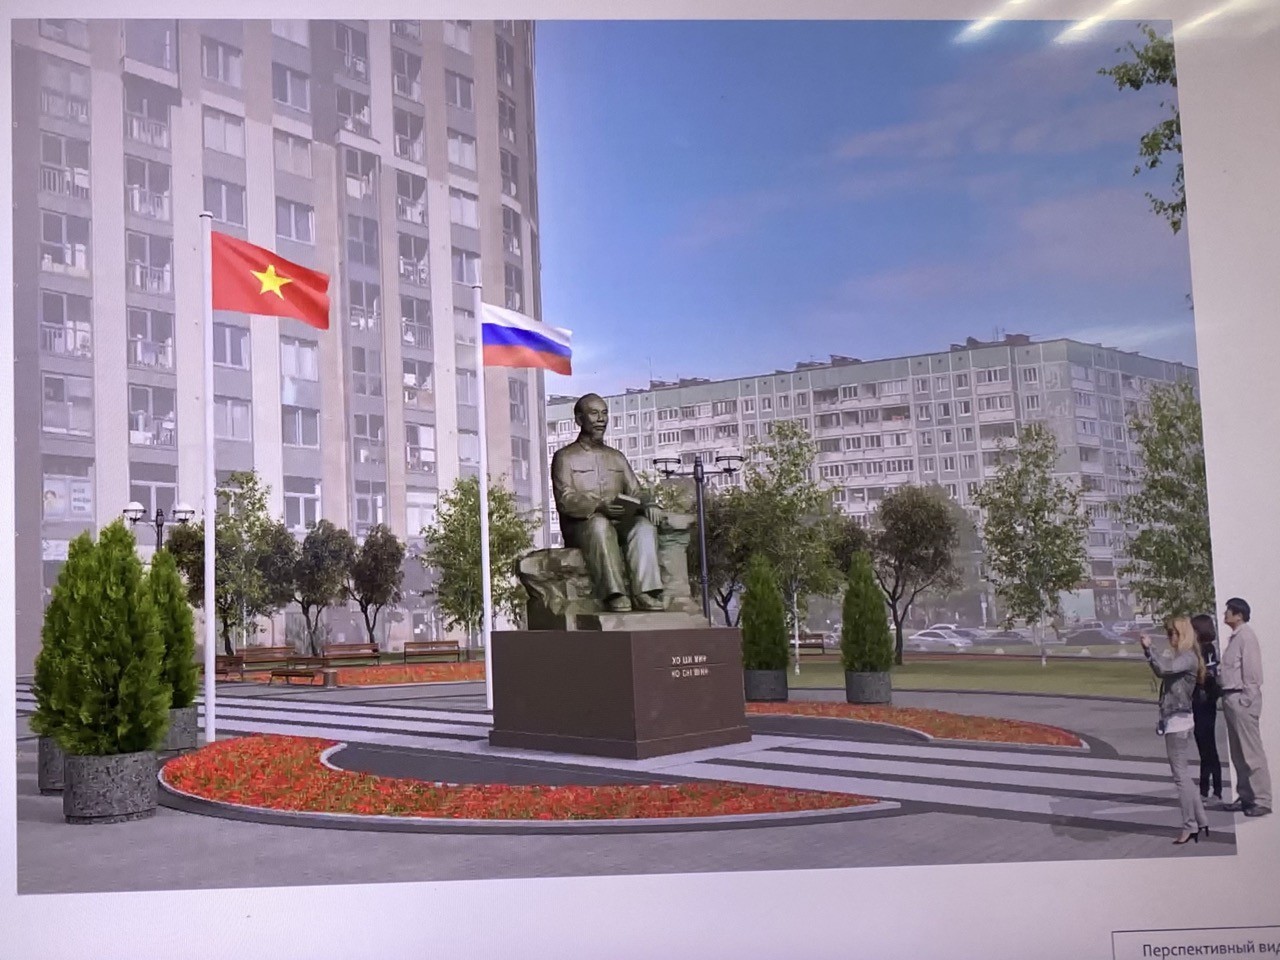 New Plans to strengthen Vietnam-Russia bilateral relationship